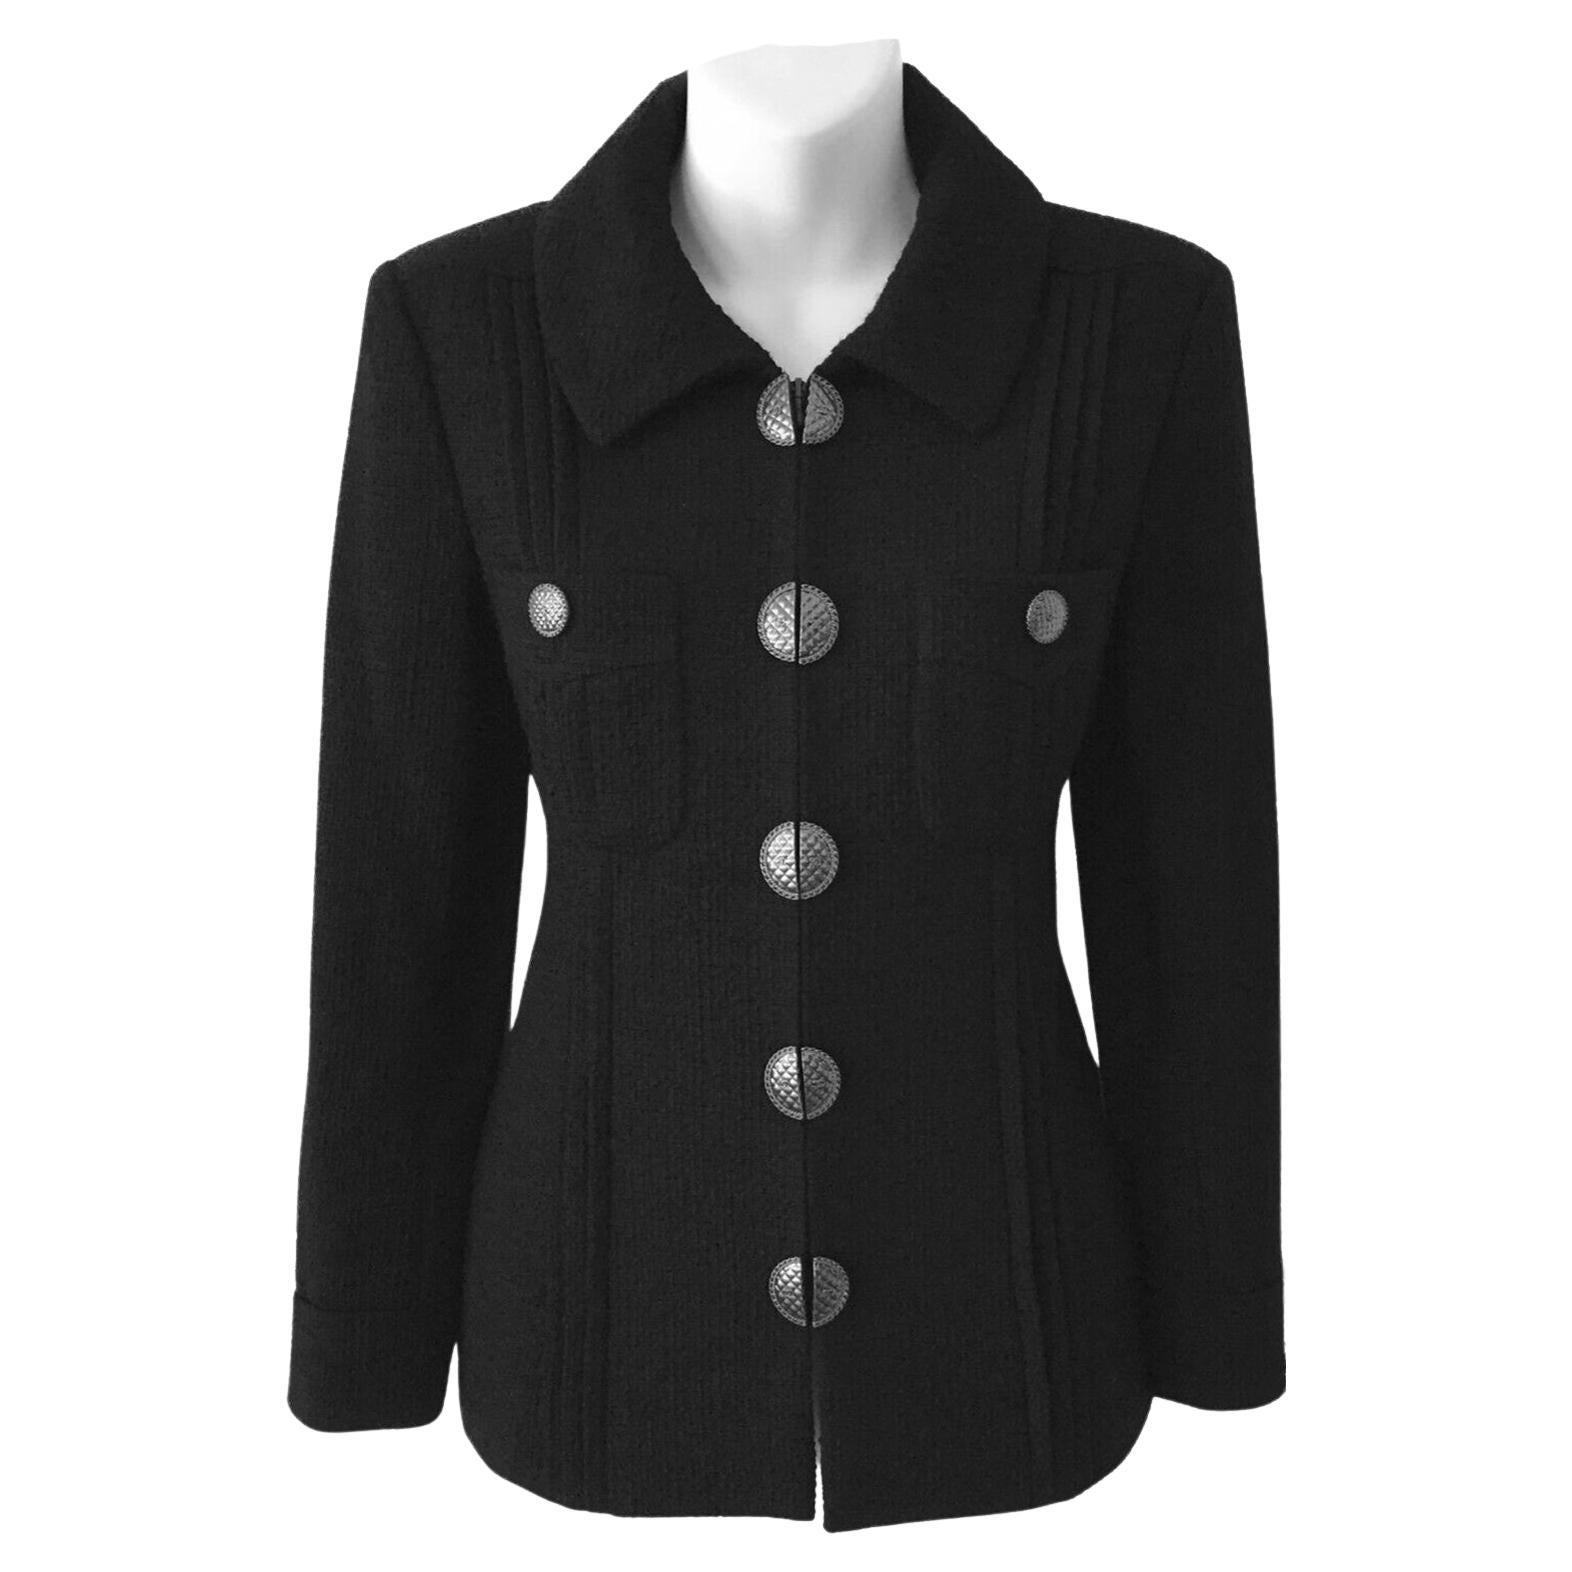 New Cuba Collection Black Tweed Jacket